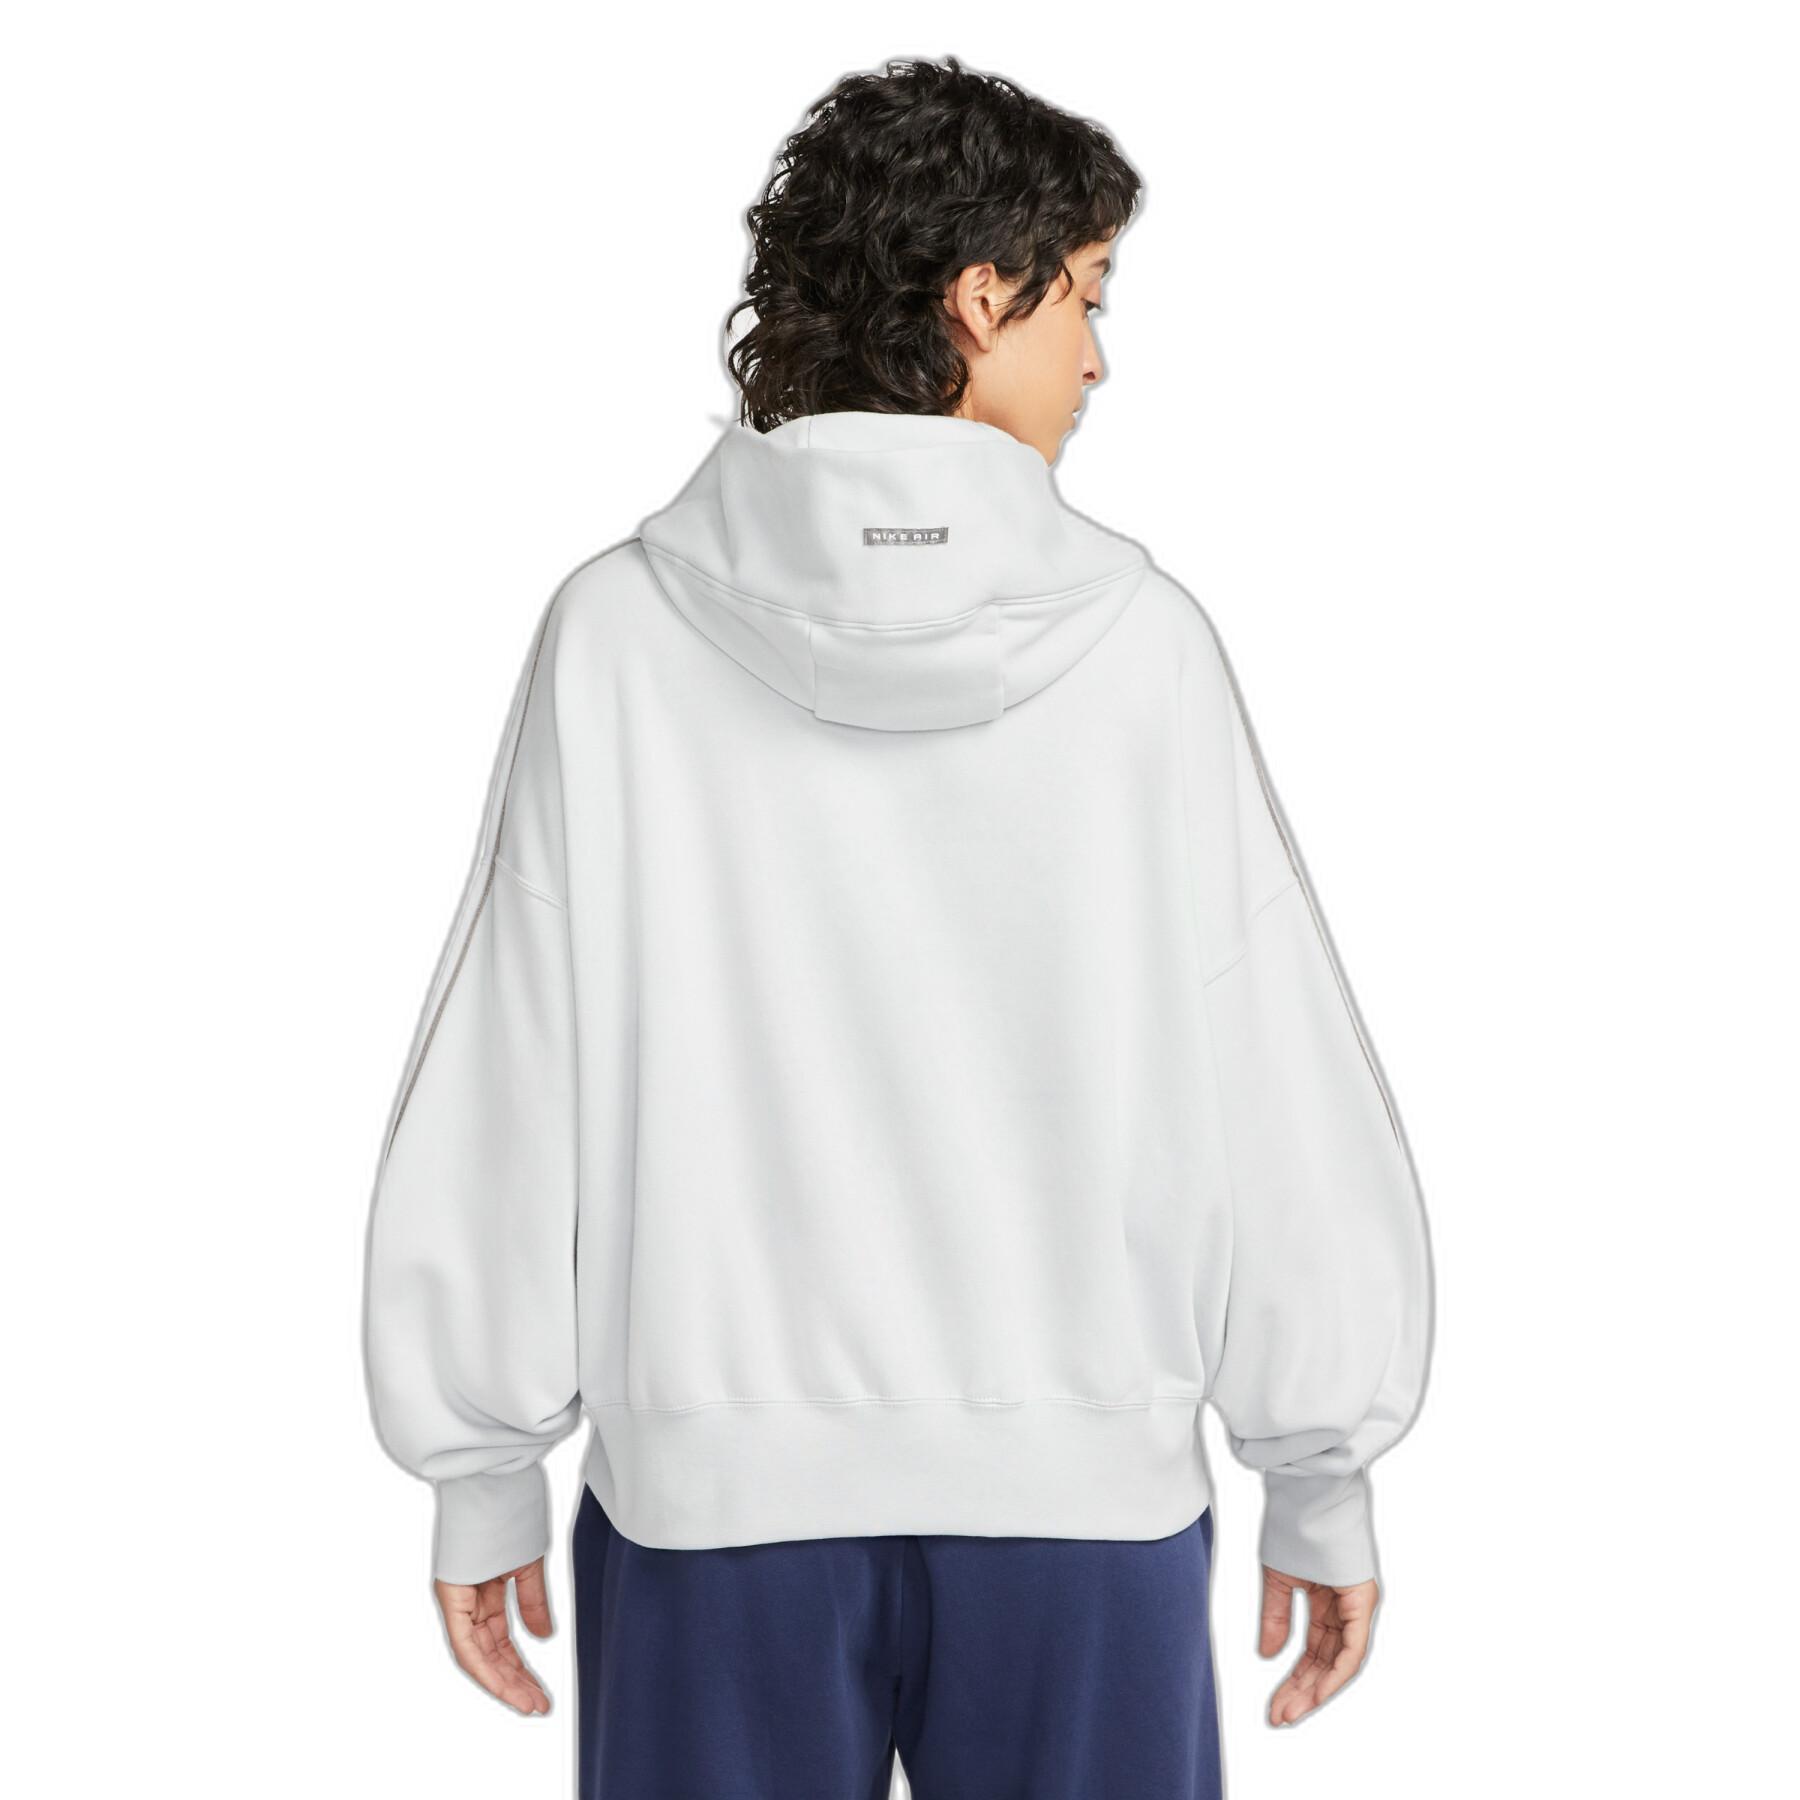 Sweatshirt à capuche molleton femme Nike Sportswear Air